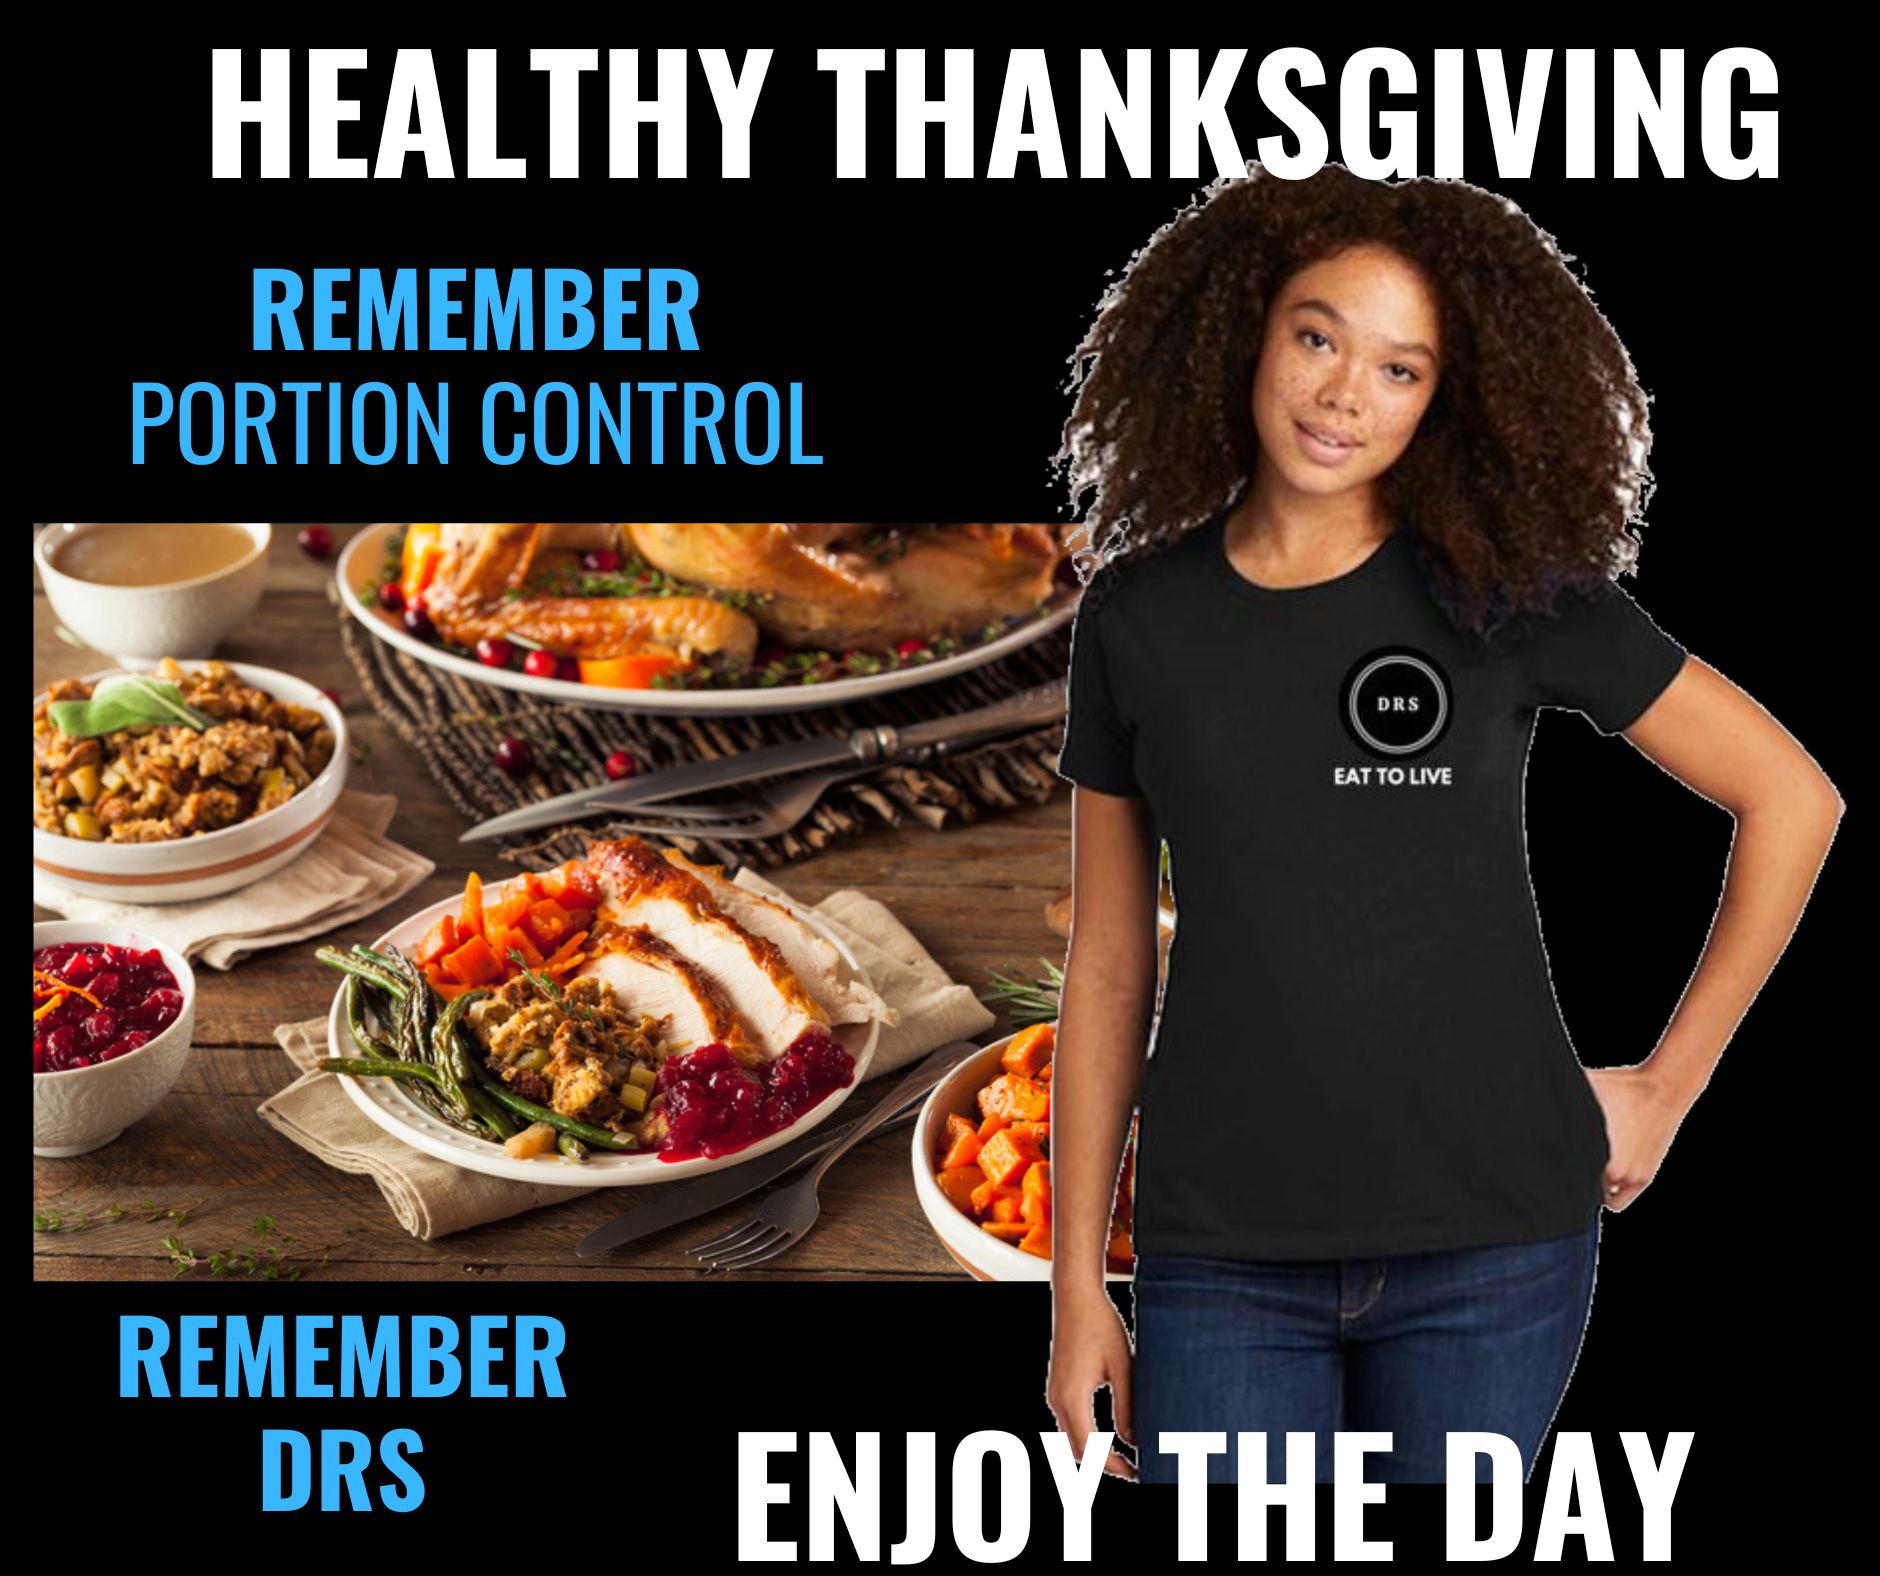 Having a Healthy Thanksgiving